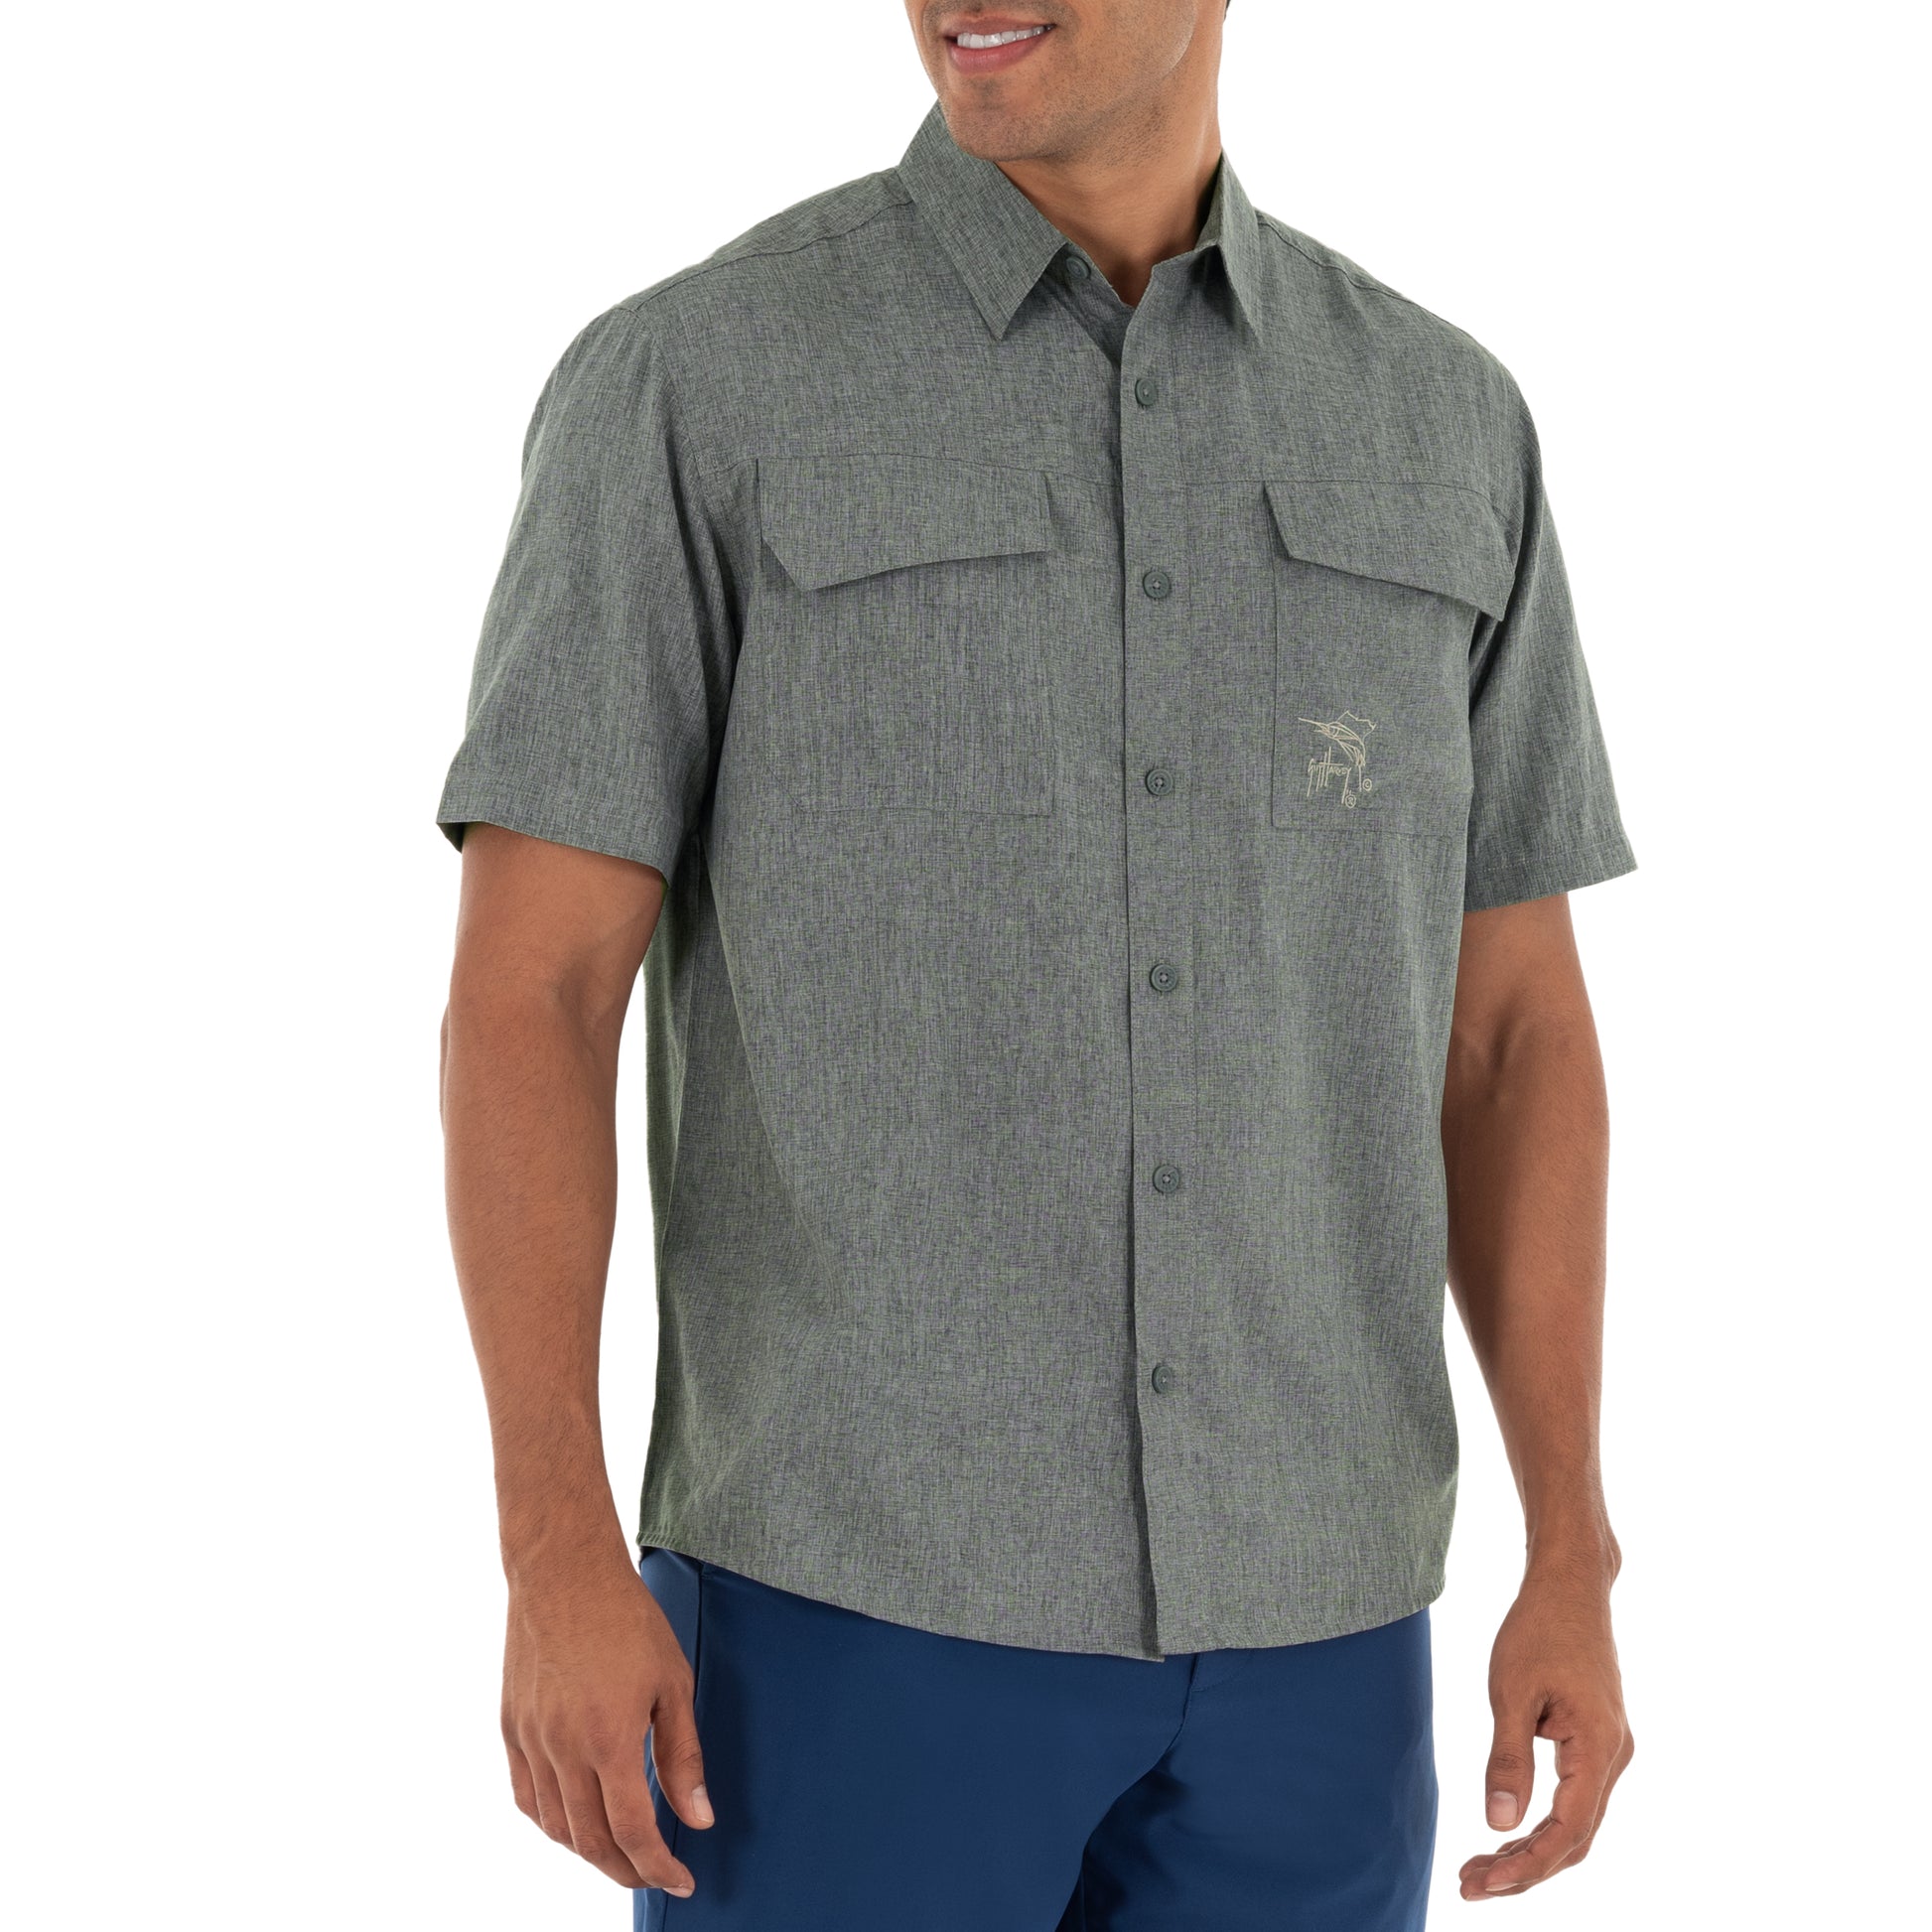 Men's Short Sleeve Heather Textured Cationic Grey Fishing Shirt – Guy Harvey